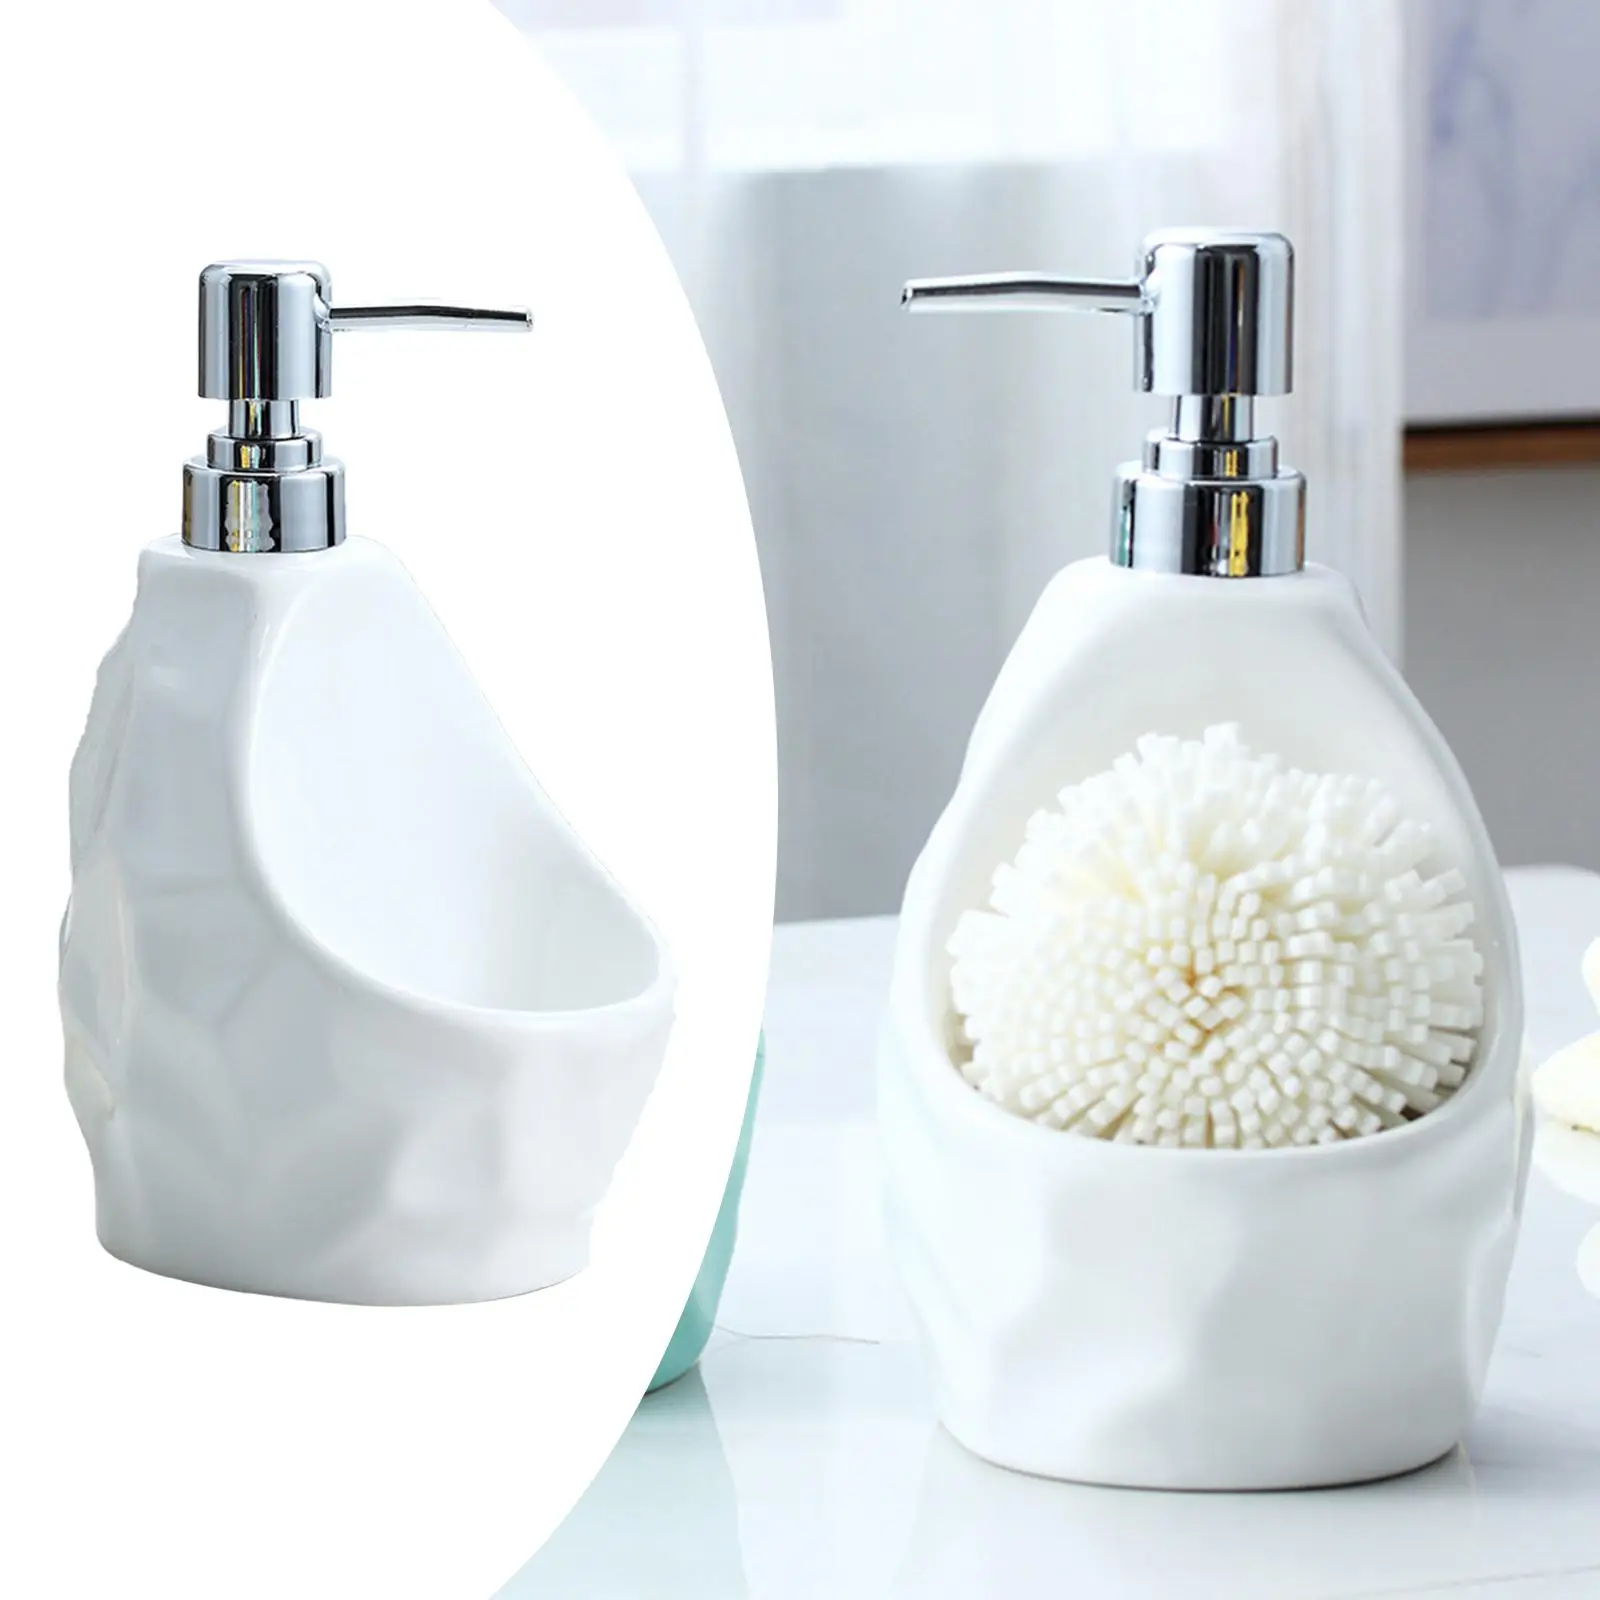 650ml Soap Dispenser Empty Holds Stores Sponges Scrubbers Brushes Modern Holder for Body Wash Shampoo Dish soap Bathroom